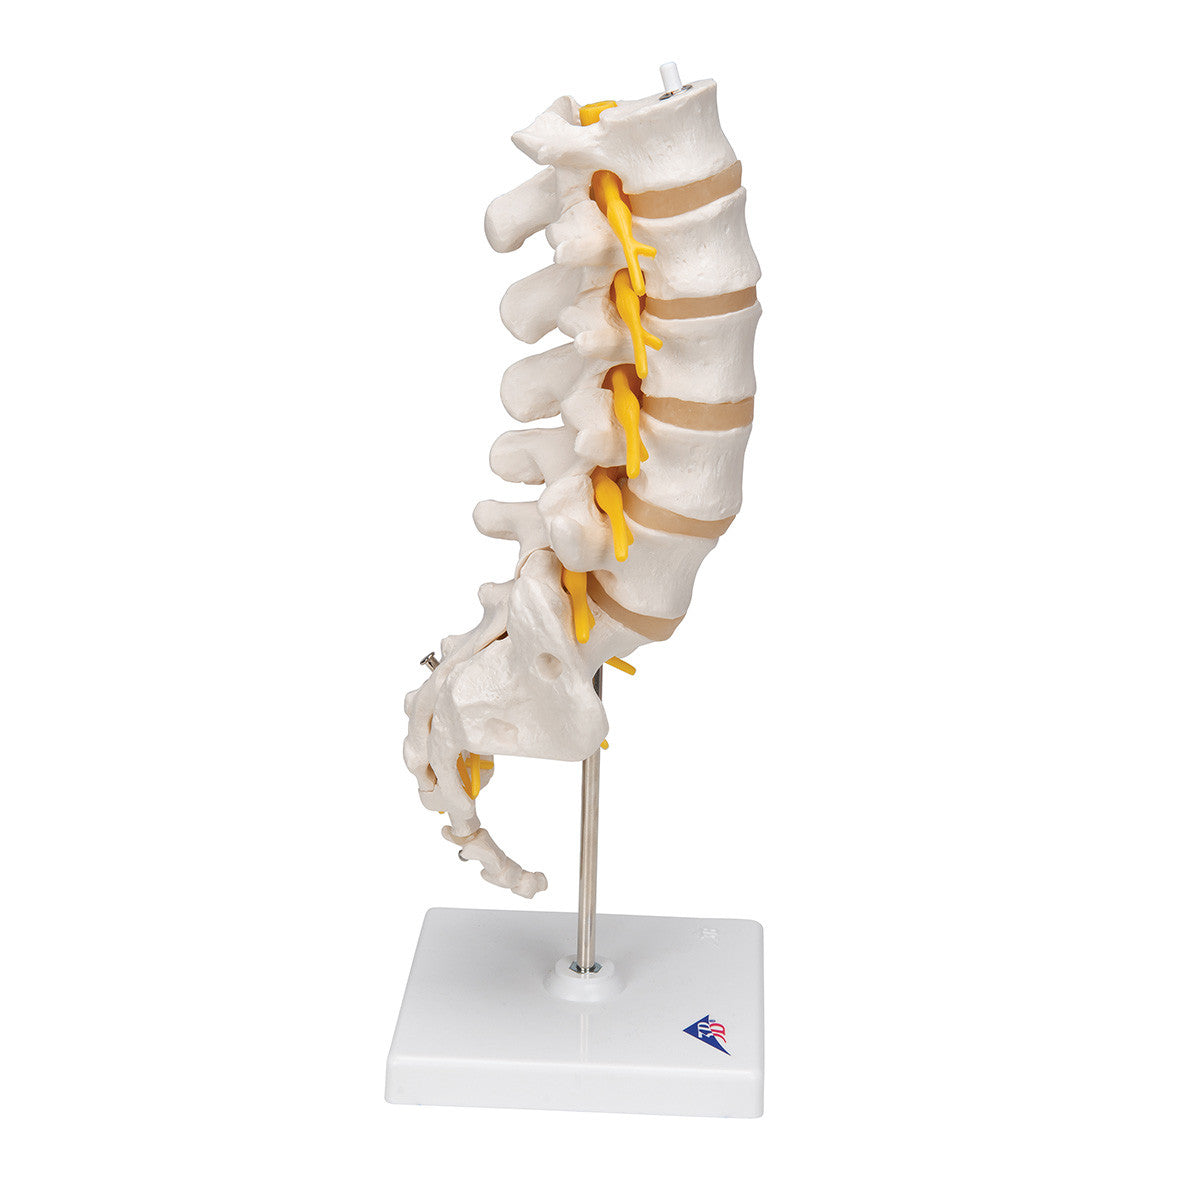 a74_02_1200_1200_lumbar-human-spinal-column-model-3b-smart-anatomy__92494.1589752910.1280.1280.jpg